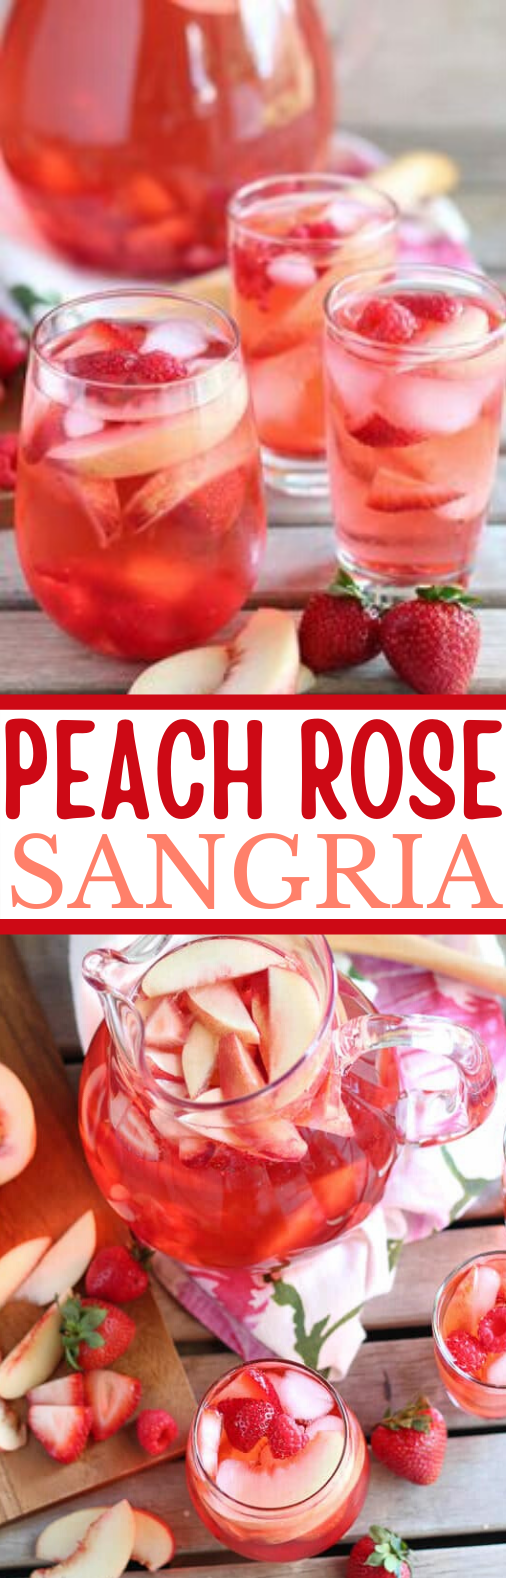 Peach Rosé Sangria #party #drinks #summer #cocktail #brunch